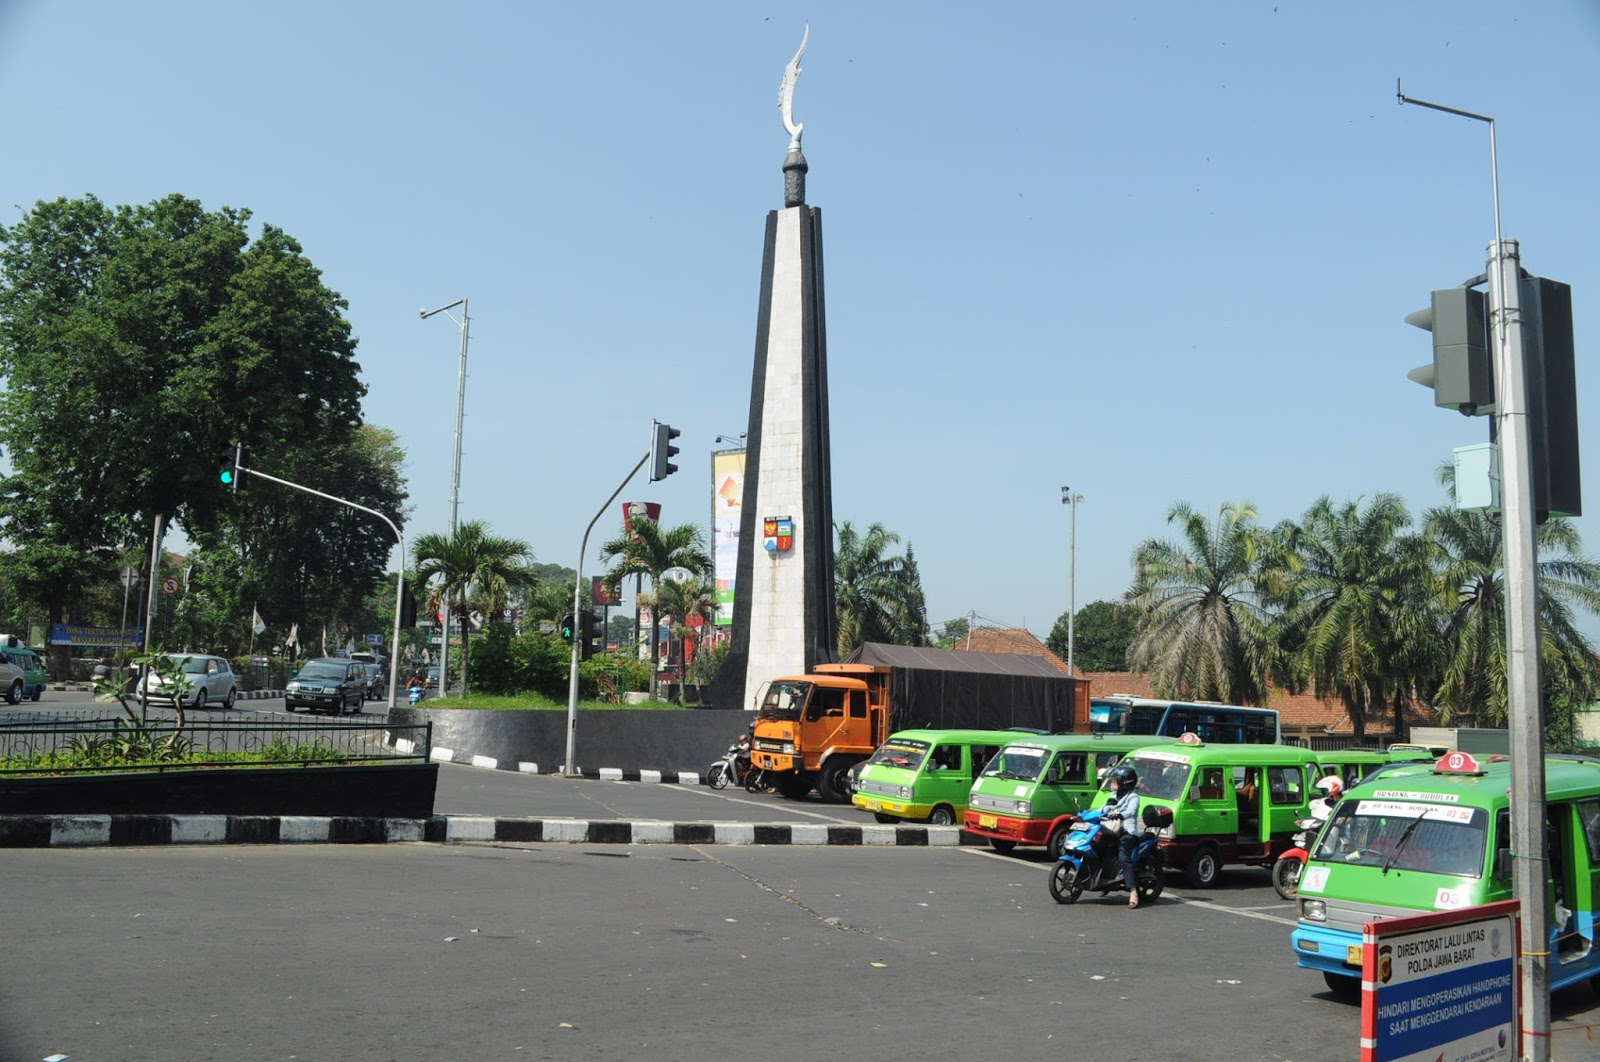 Daftar Lengkap Perguruan Tinggi Di Bogor